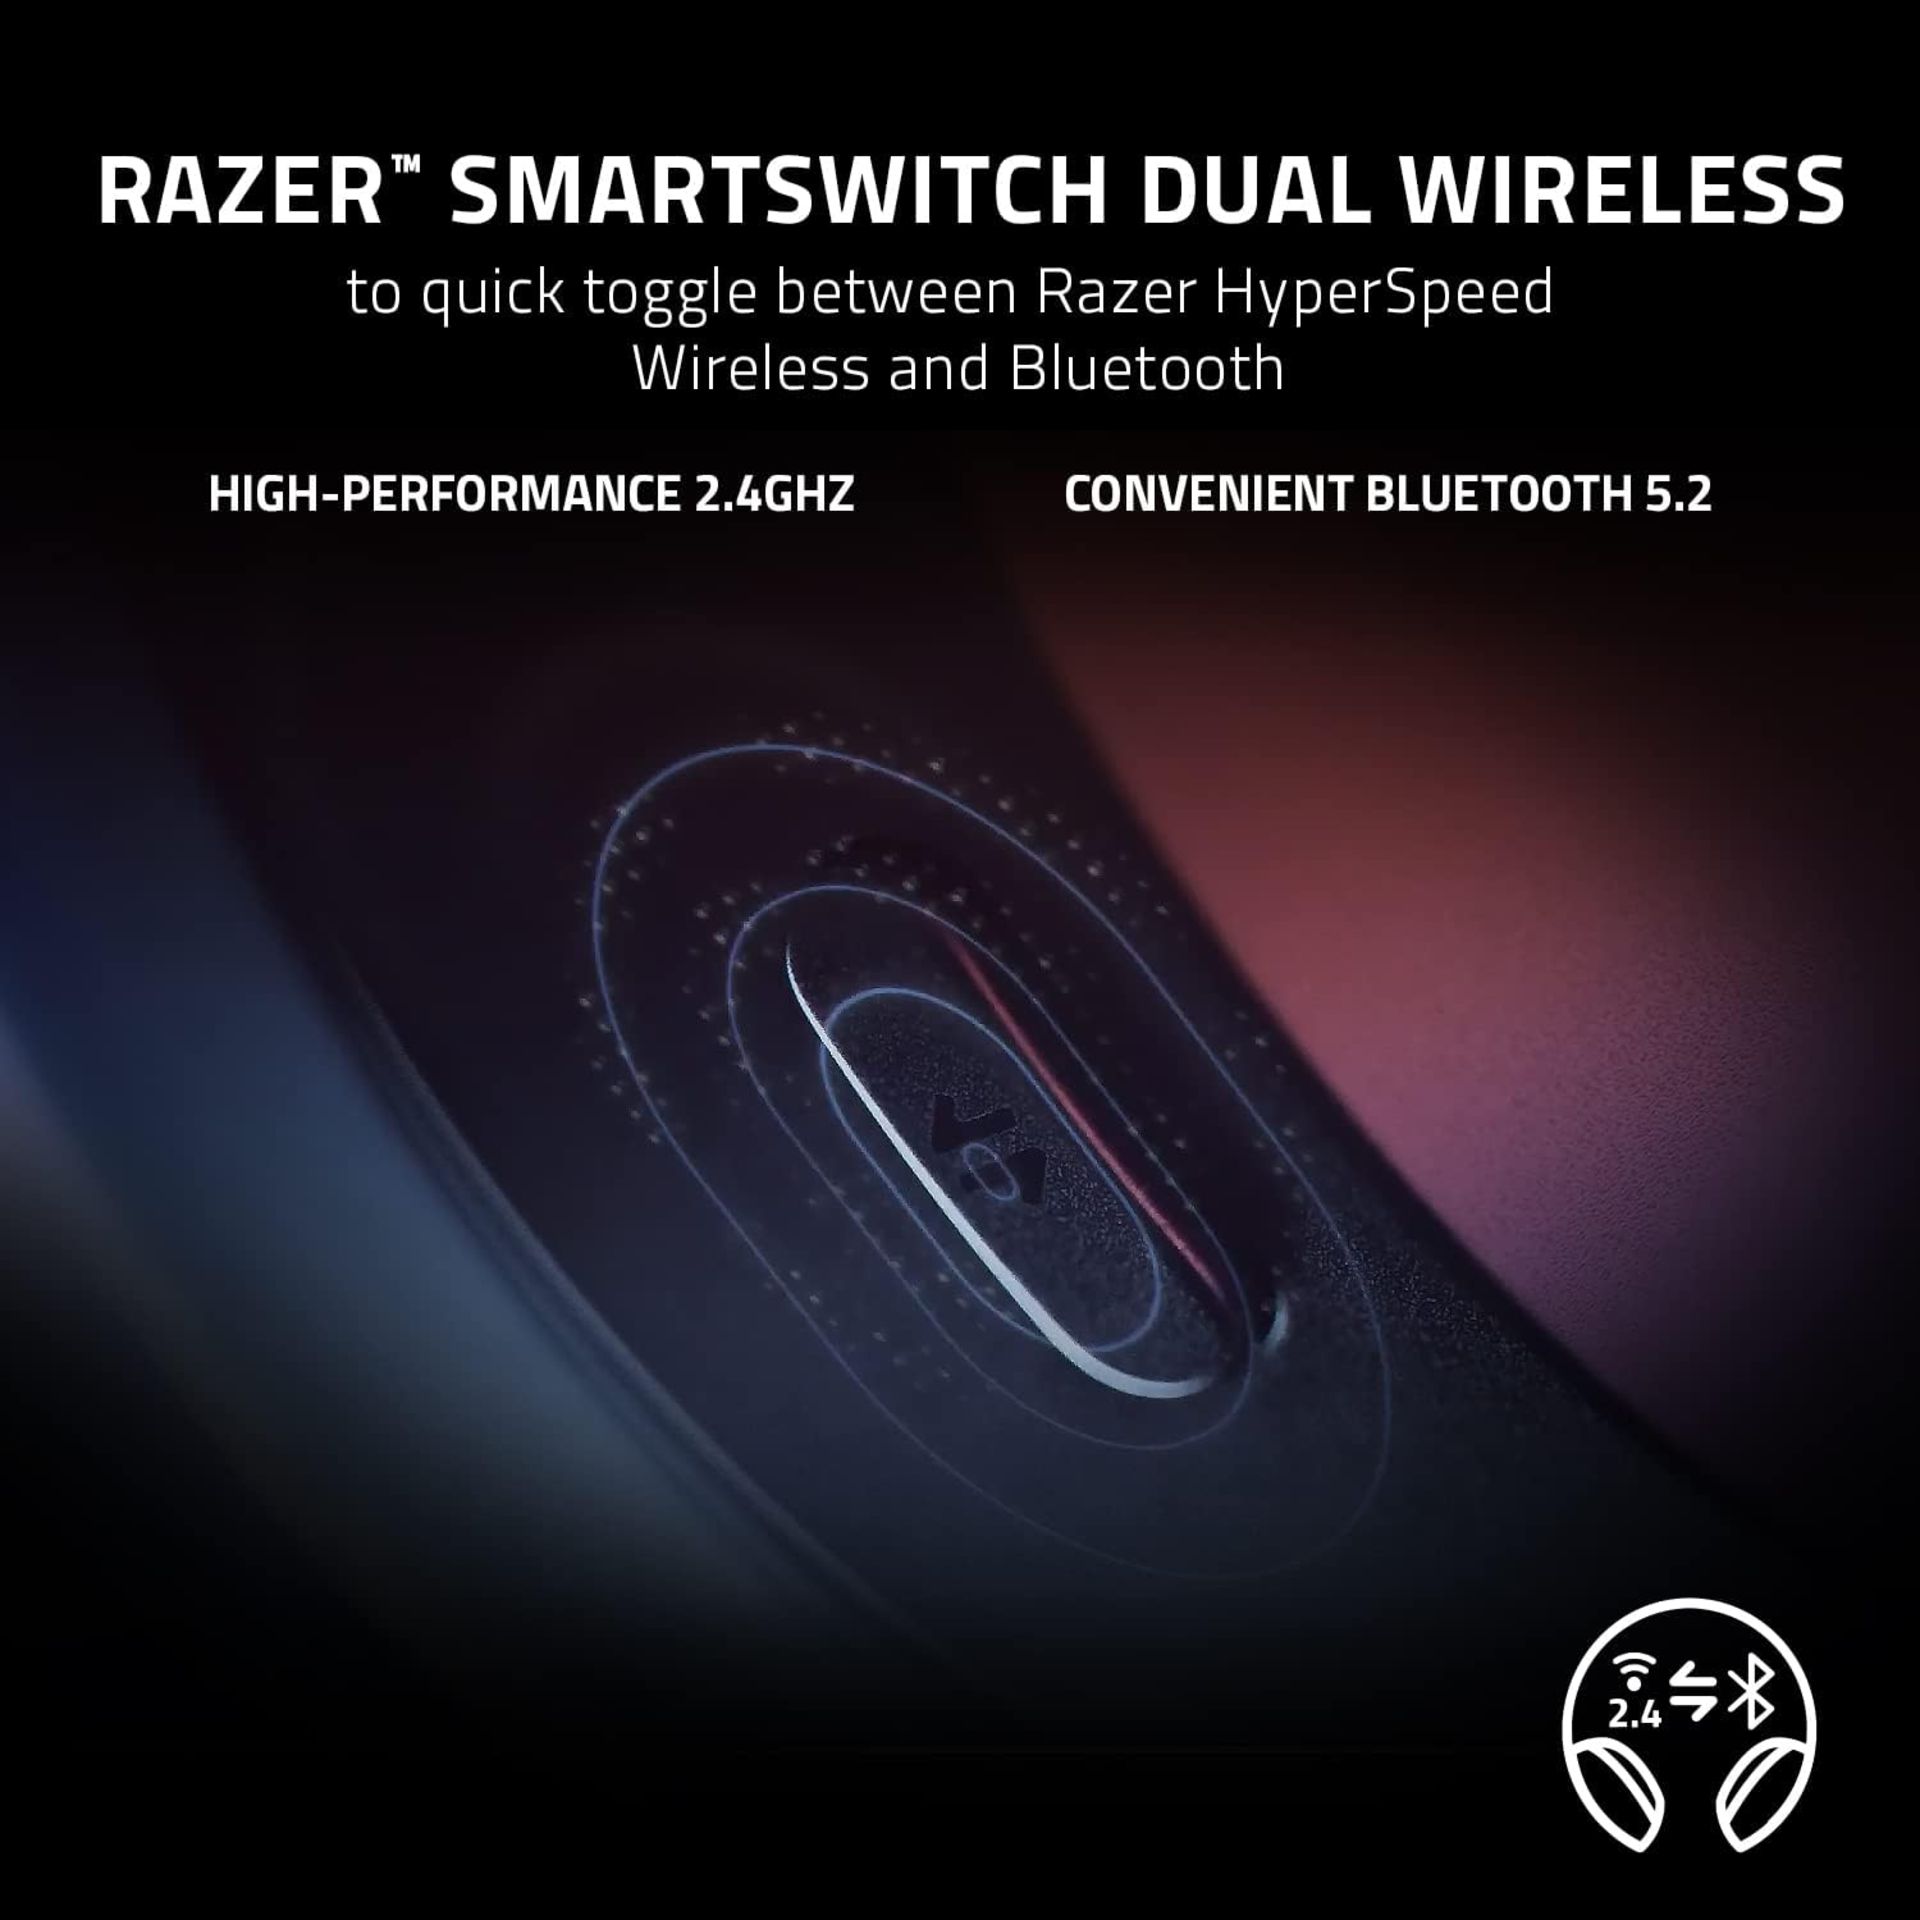 RAZER Barracuda Wireless Multi-platform Gaming and Mobile Headset - BLACK. RRP £159.99. Razer - Image 2 of 7